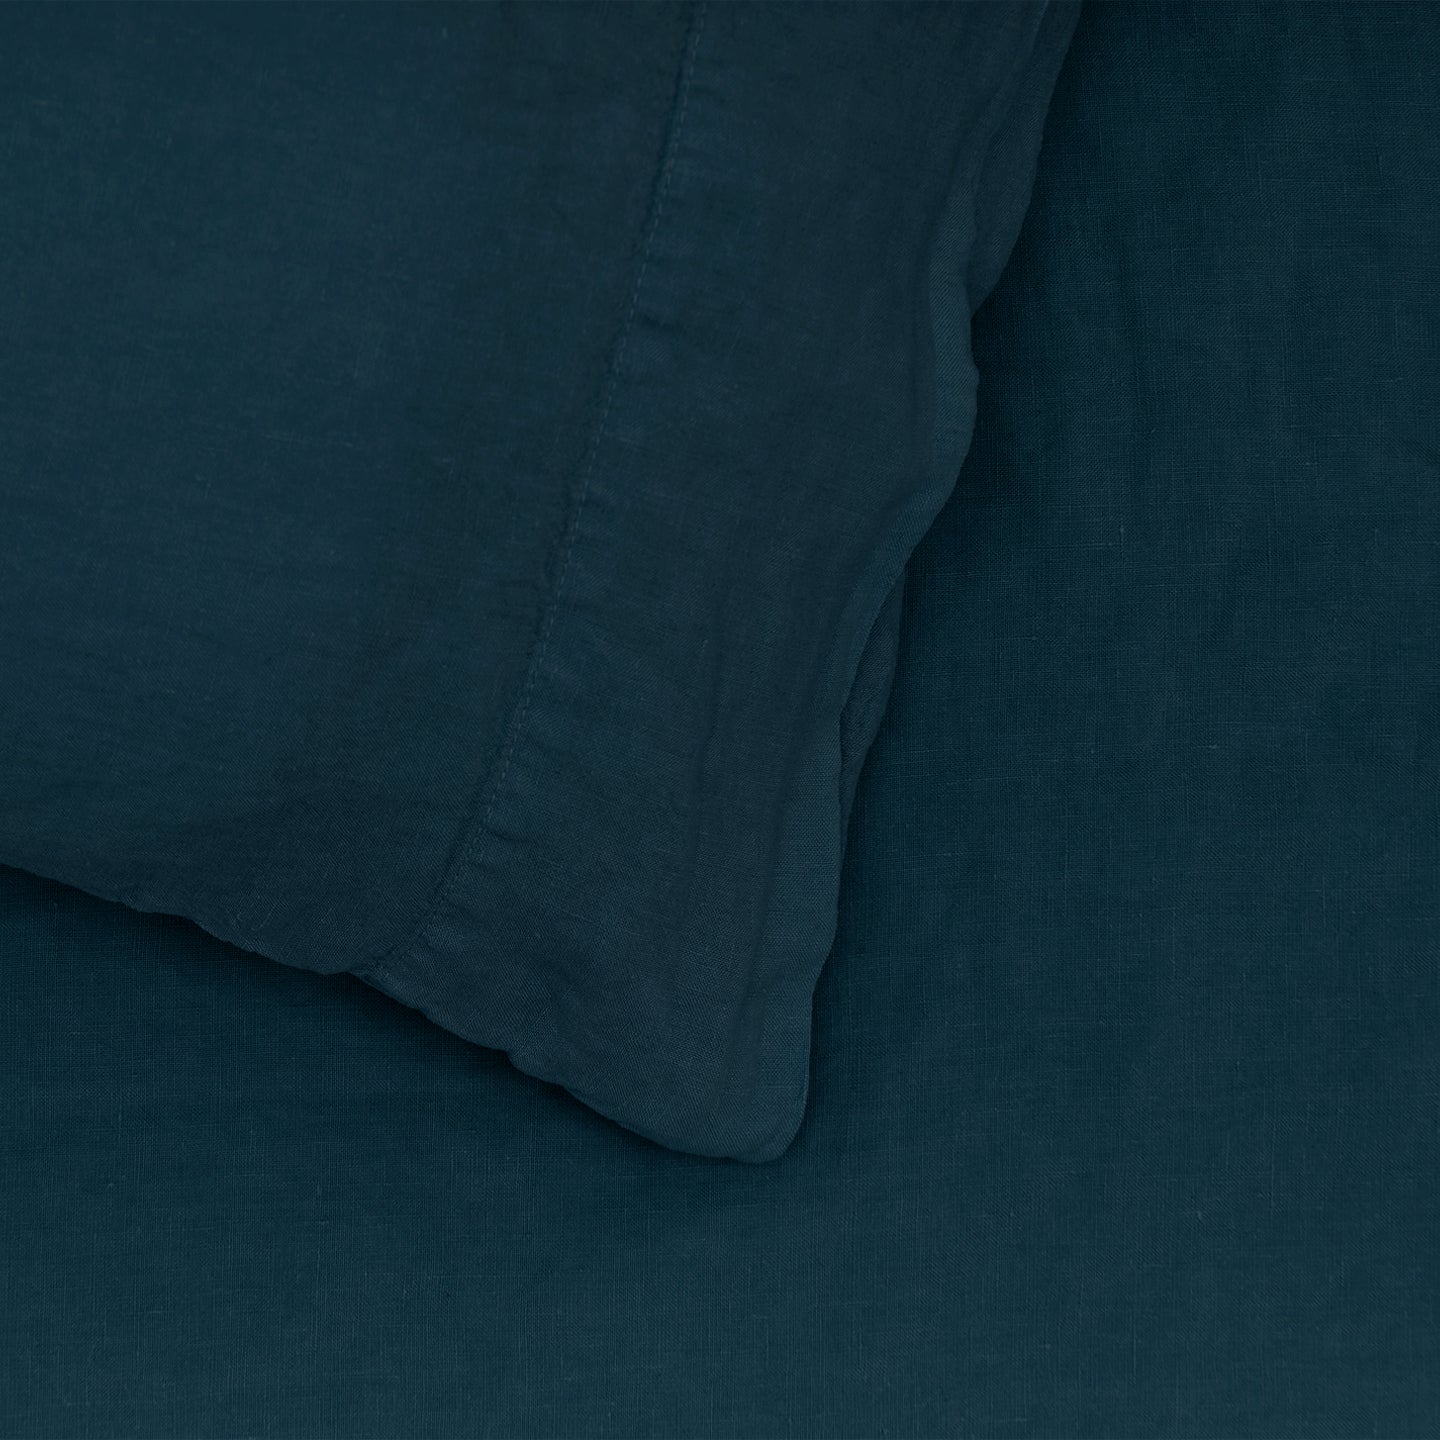 Simple Linen Pillowcases, Set of 2 - Peacock